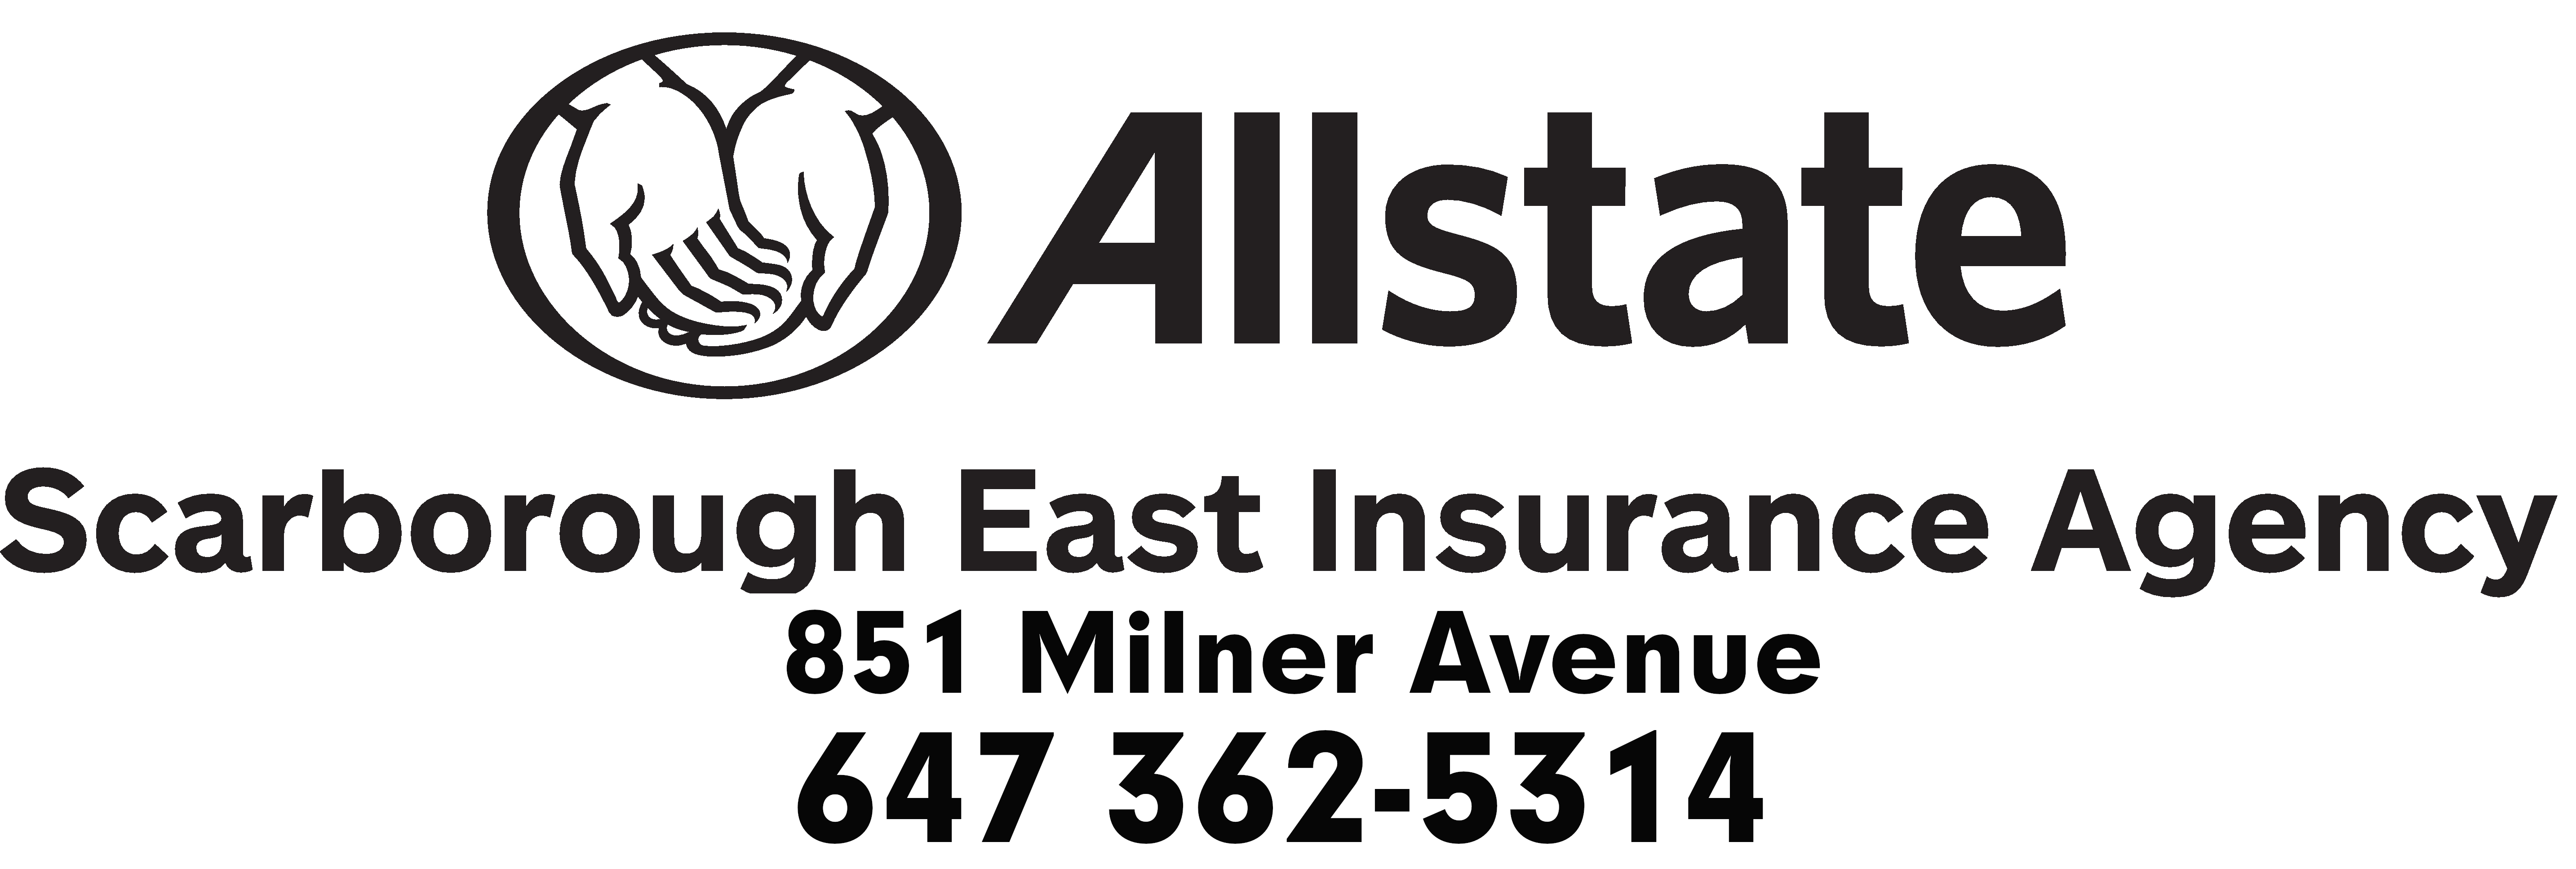 Alstate Insurance